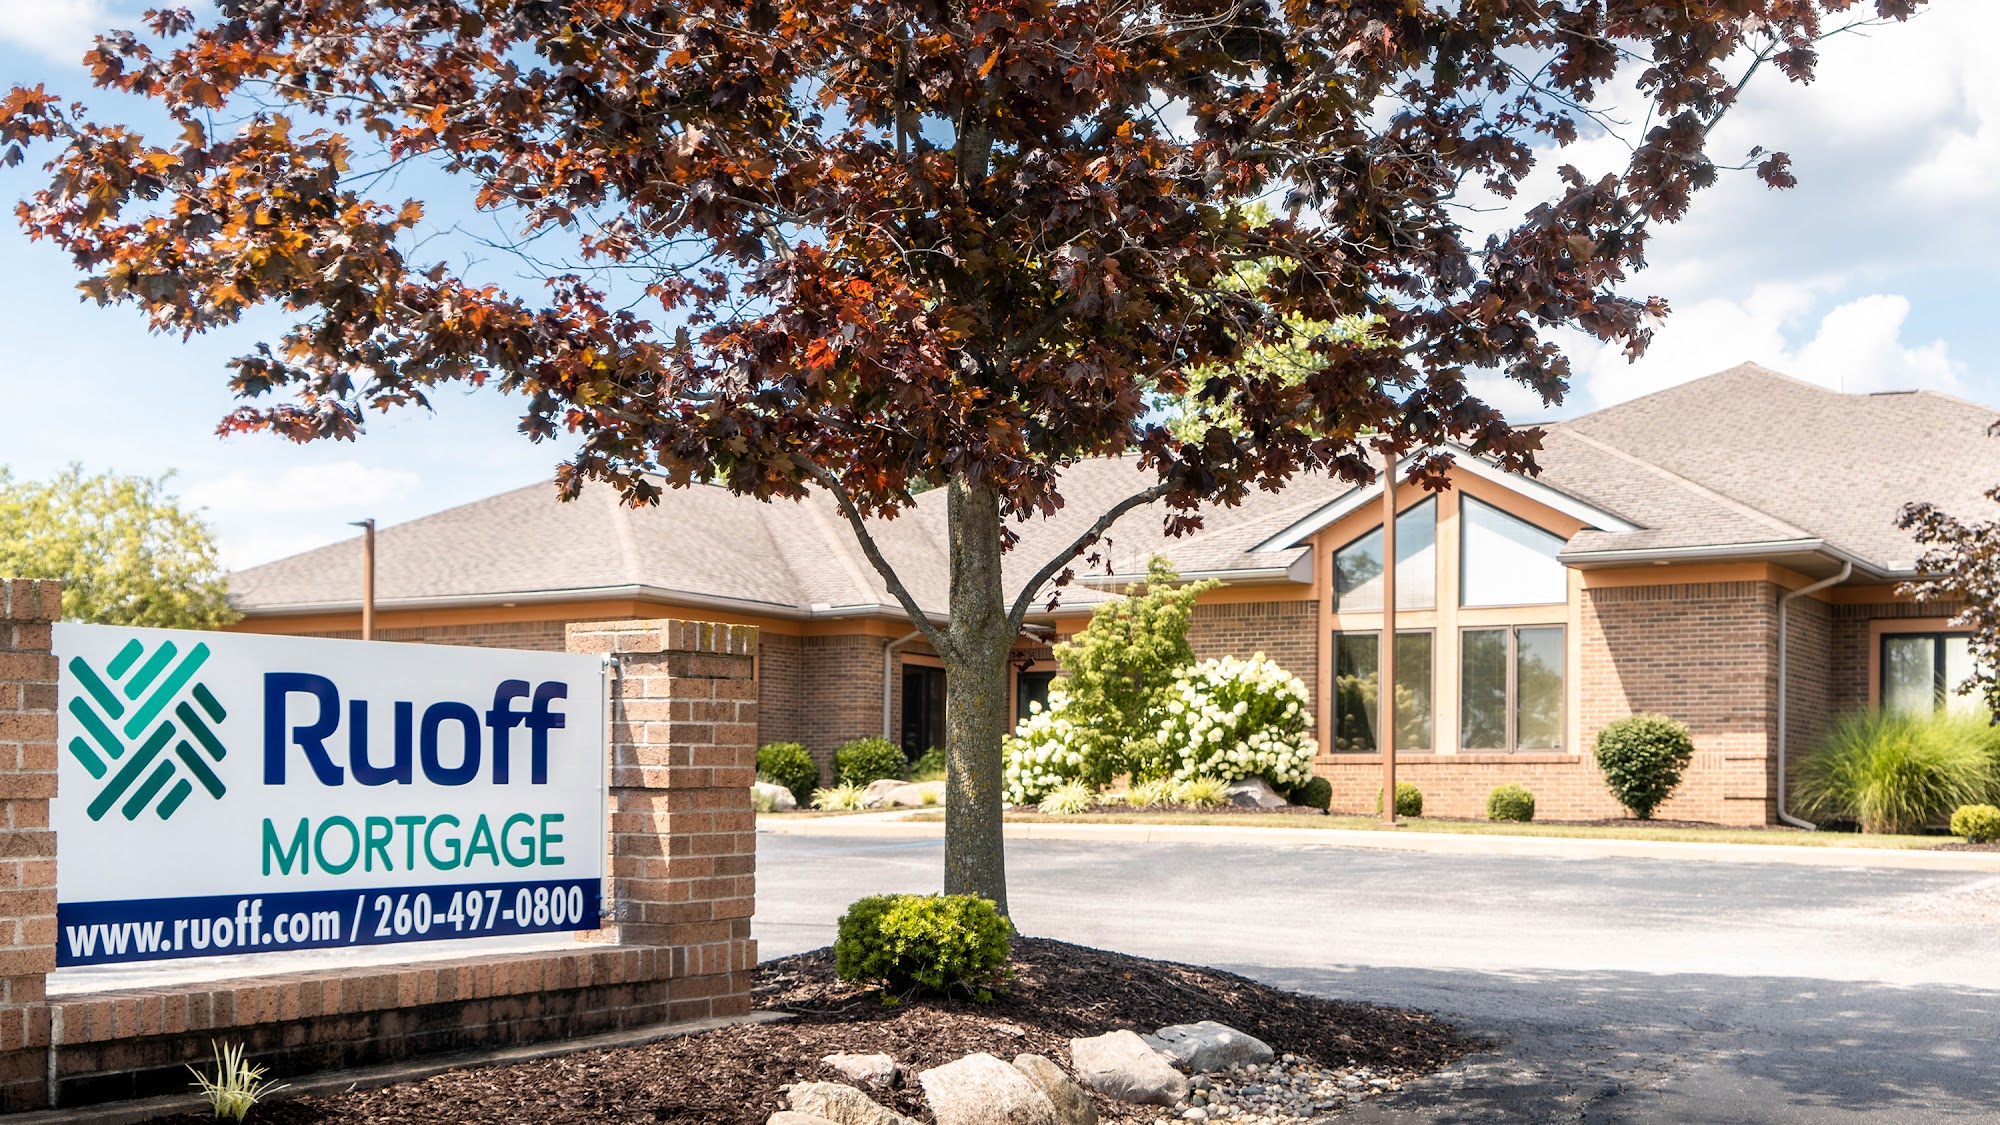 Ruoff Mortgage - North Fort Wayne